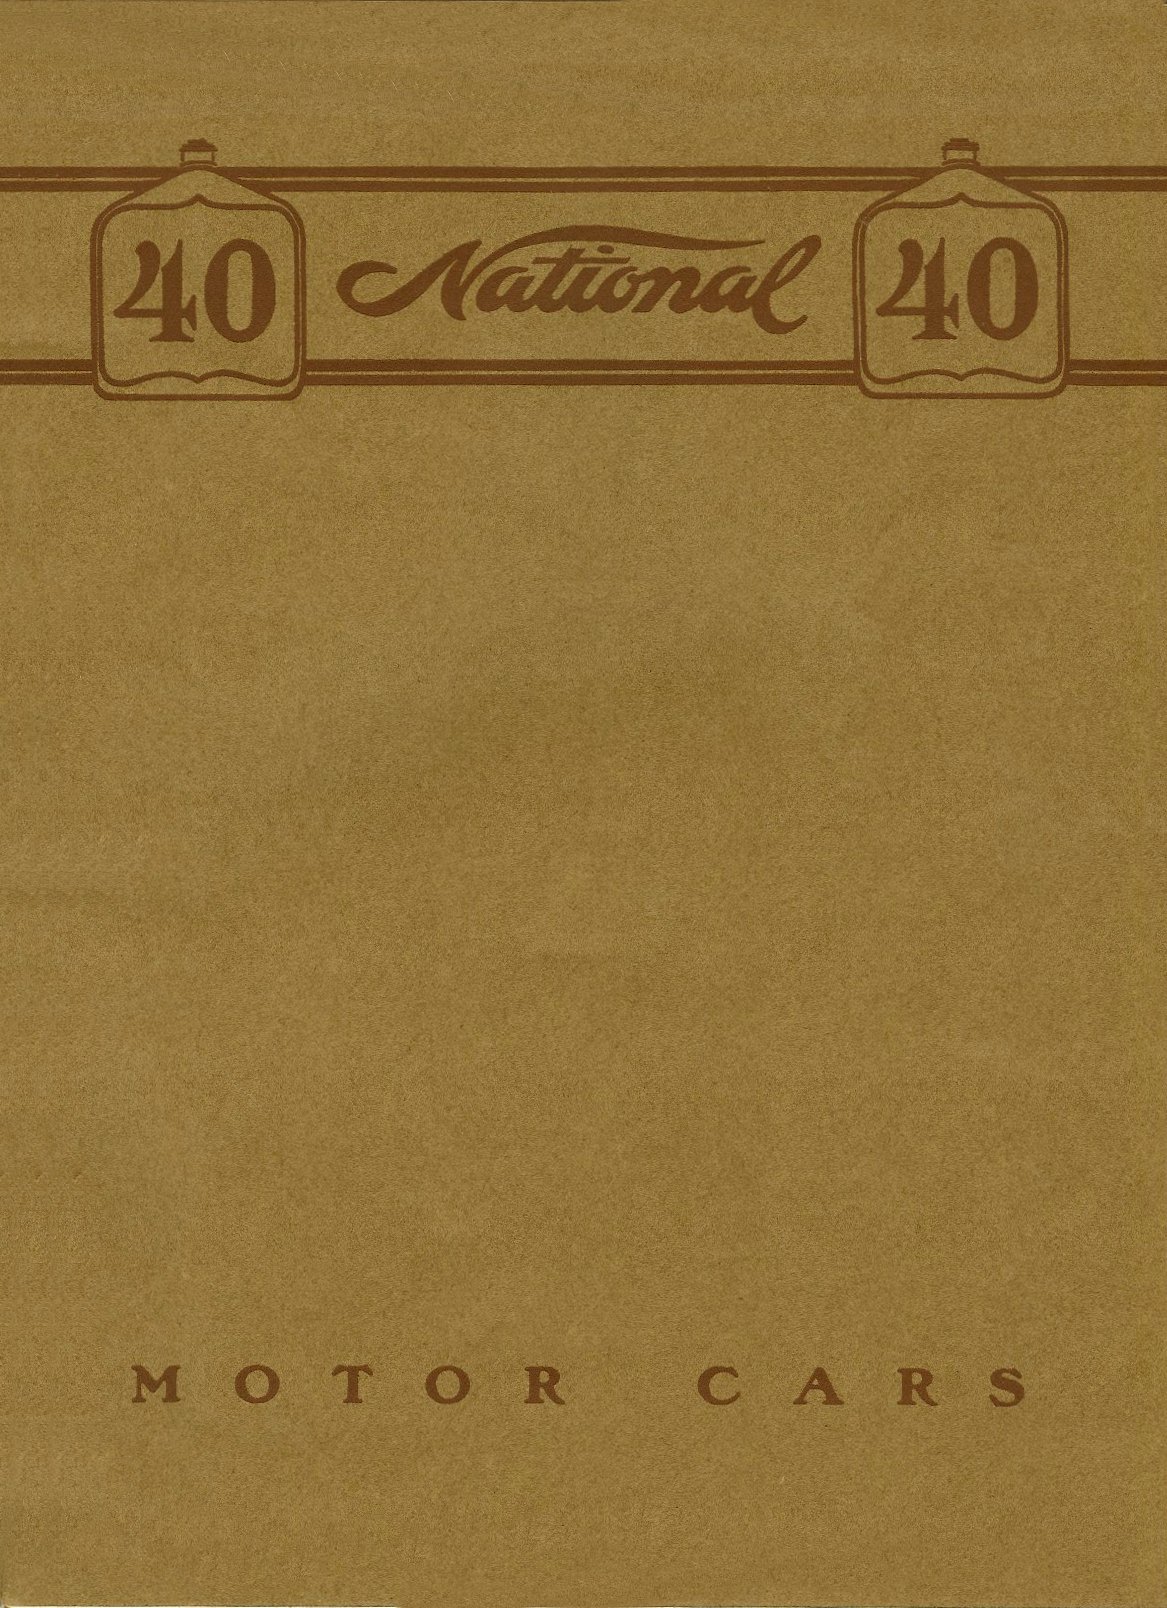 1911_National_40_Catalogue-00c